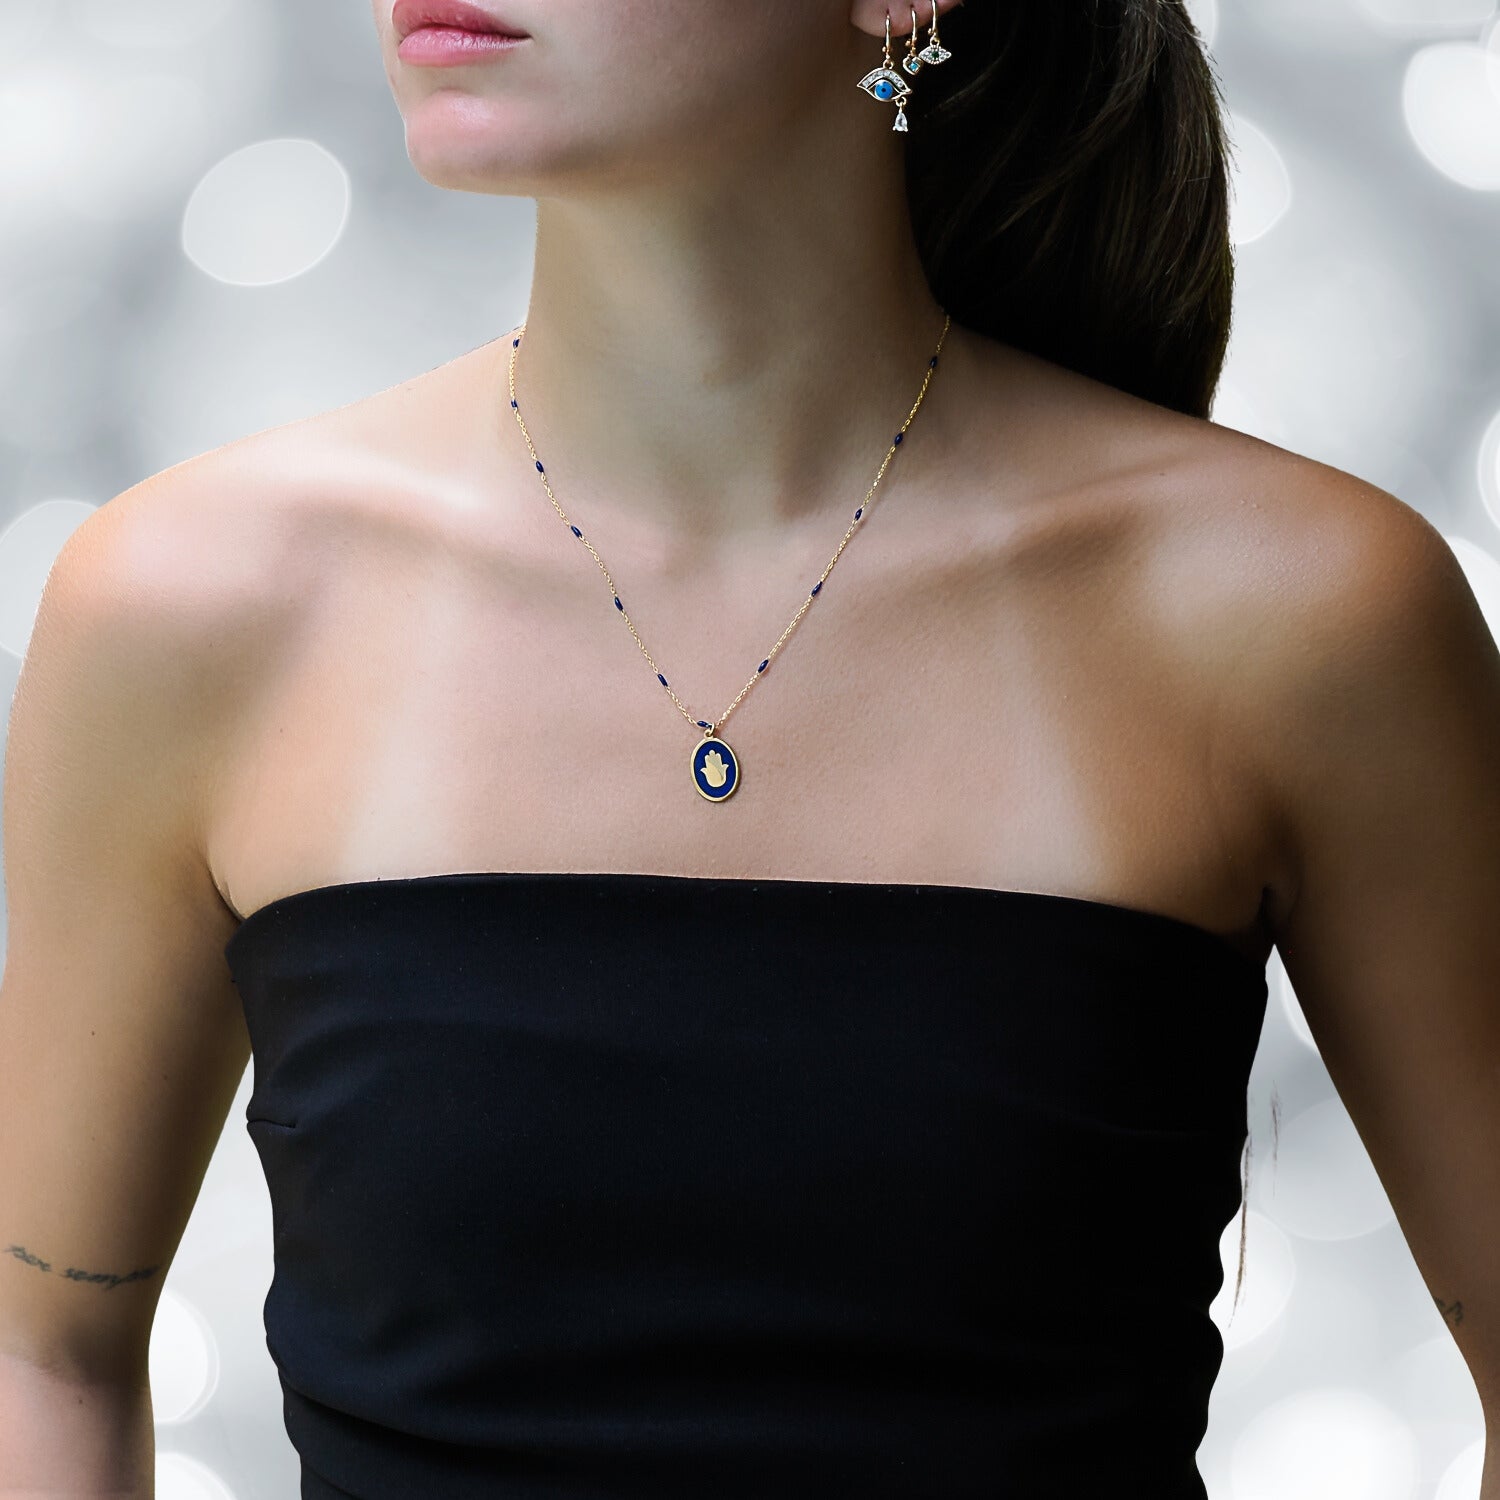 Model Adorning the Blue Enamel Hamsa Talisman Necklace - A Symbol of Protection.